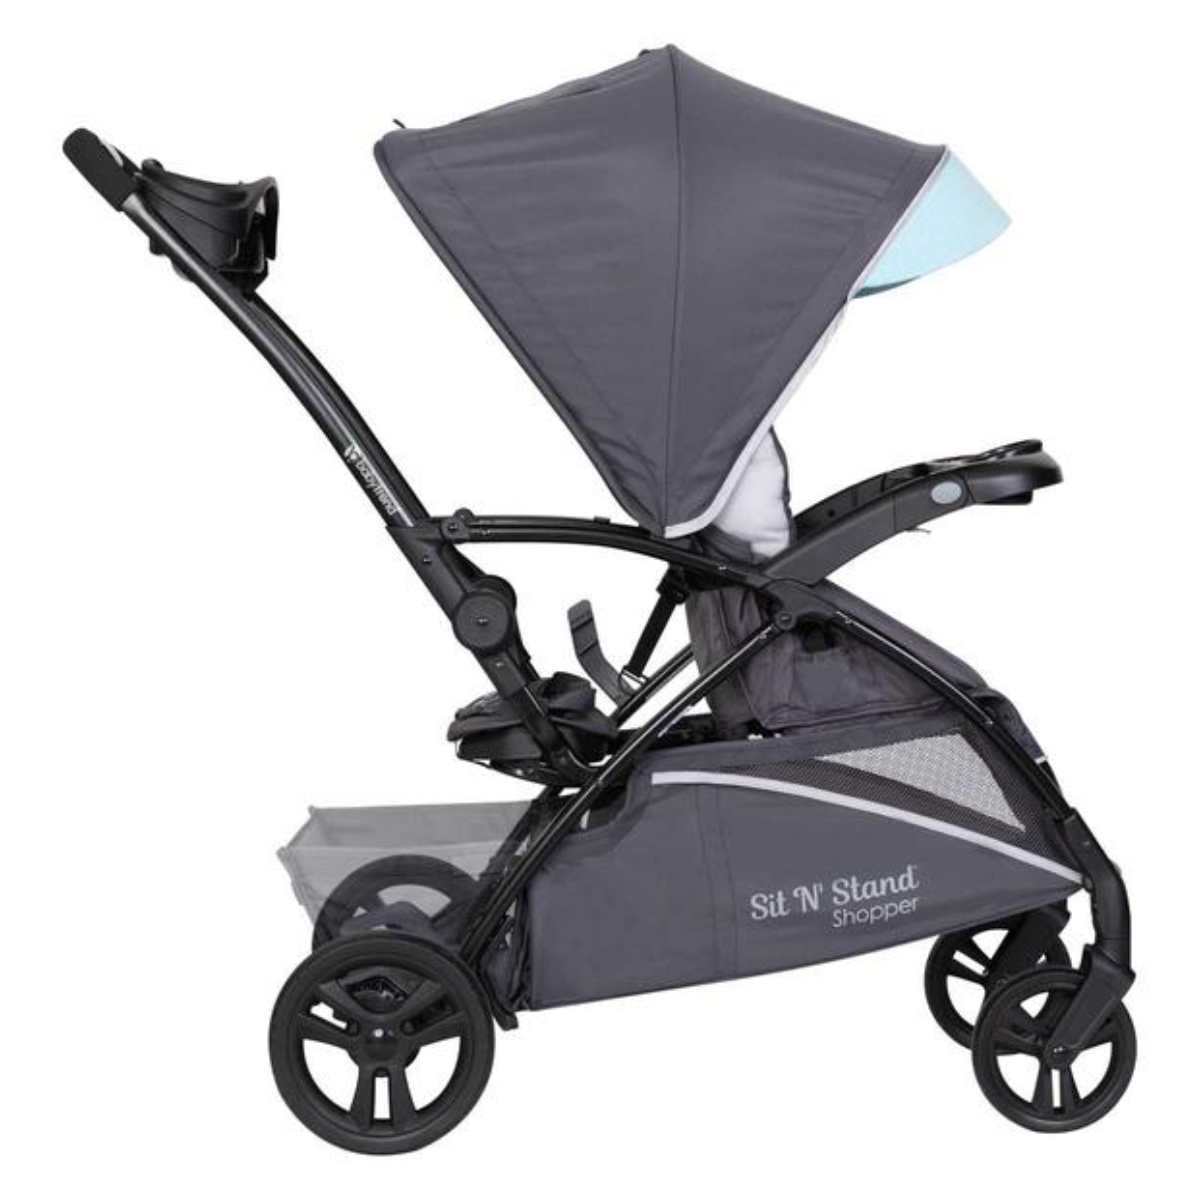 Babytrend Sit N' Stand® 5-in-1 Shopper - Blue Mist